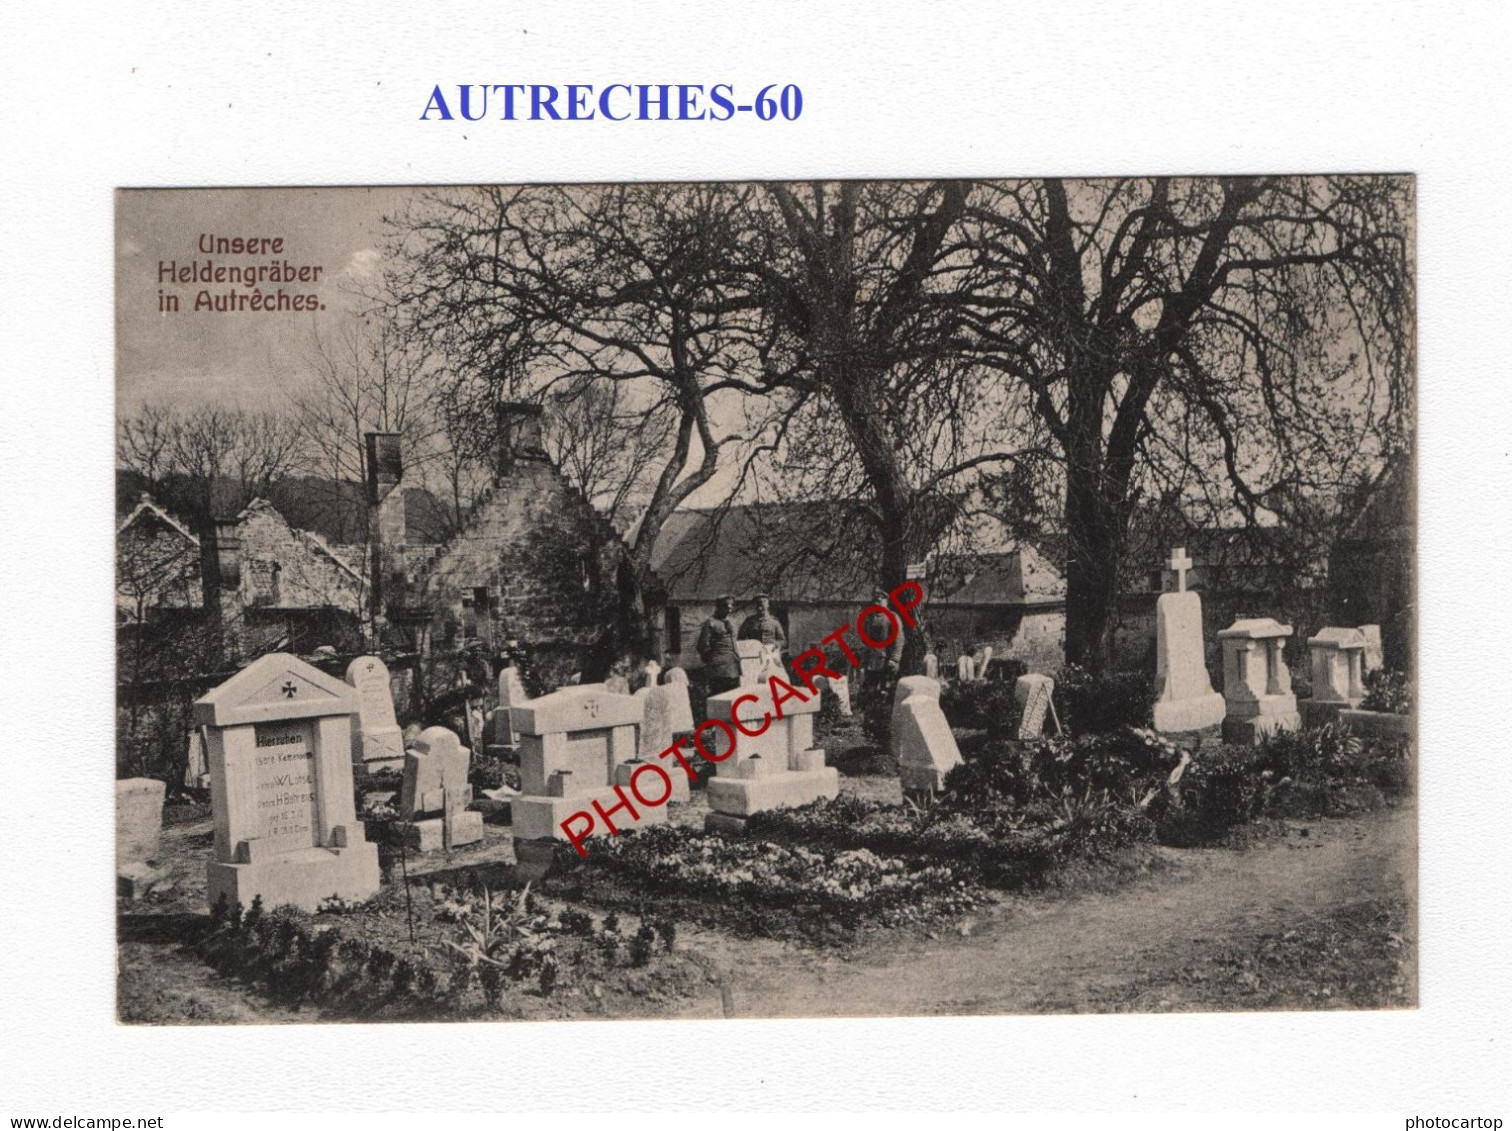 AUTRECHES-60-Monument-Cimetiere-Tombes-CARTE Imprimee Allemande-GUERRE 14-18-1 WK-MILITARIA-Feldpost - Cimetières Militaires